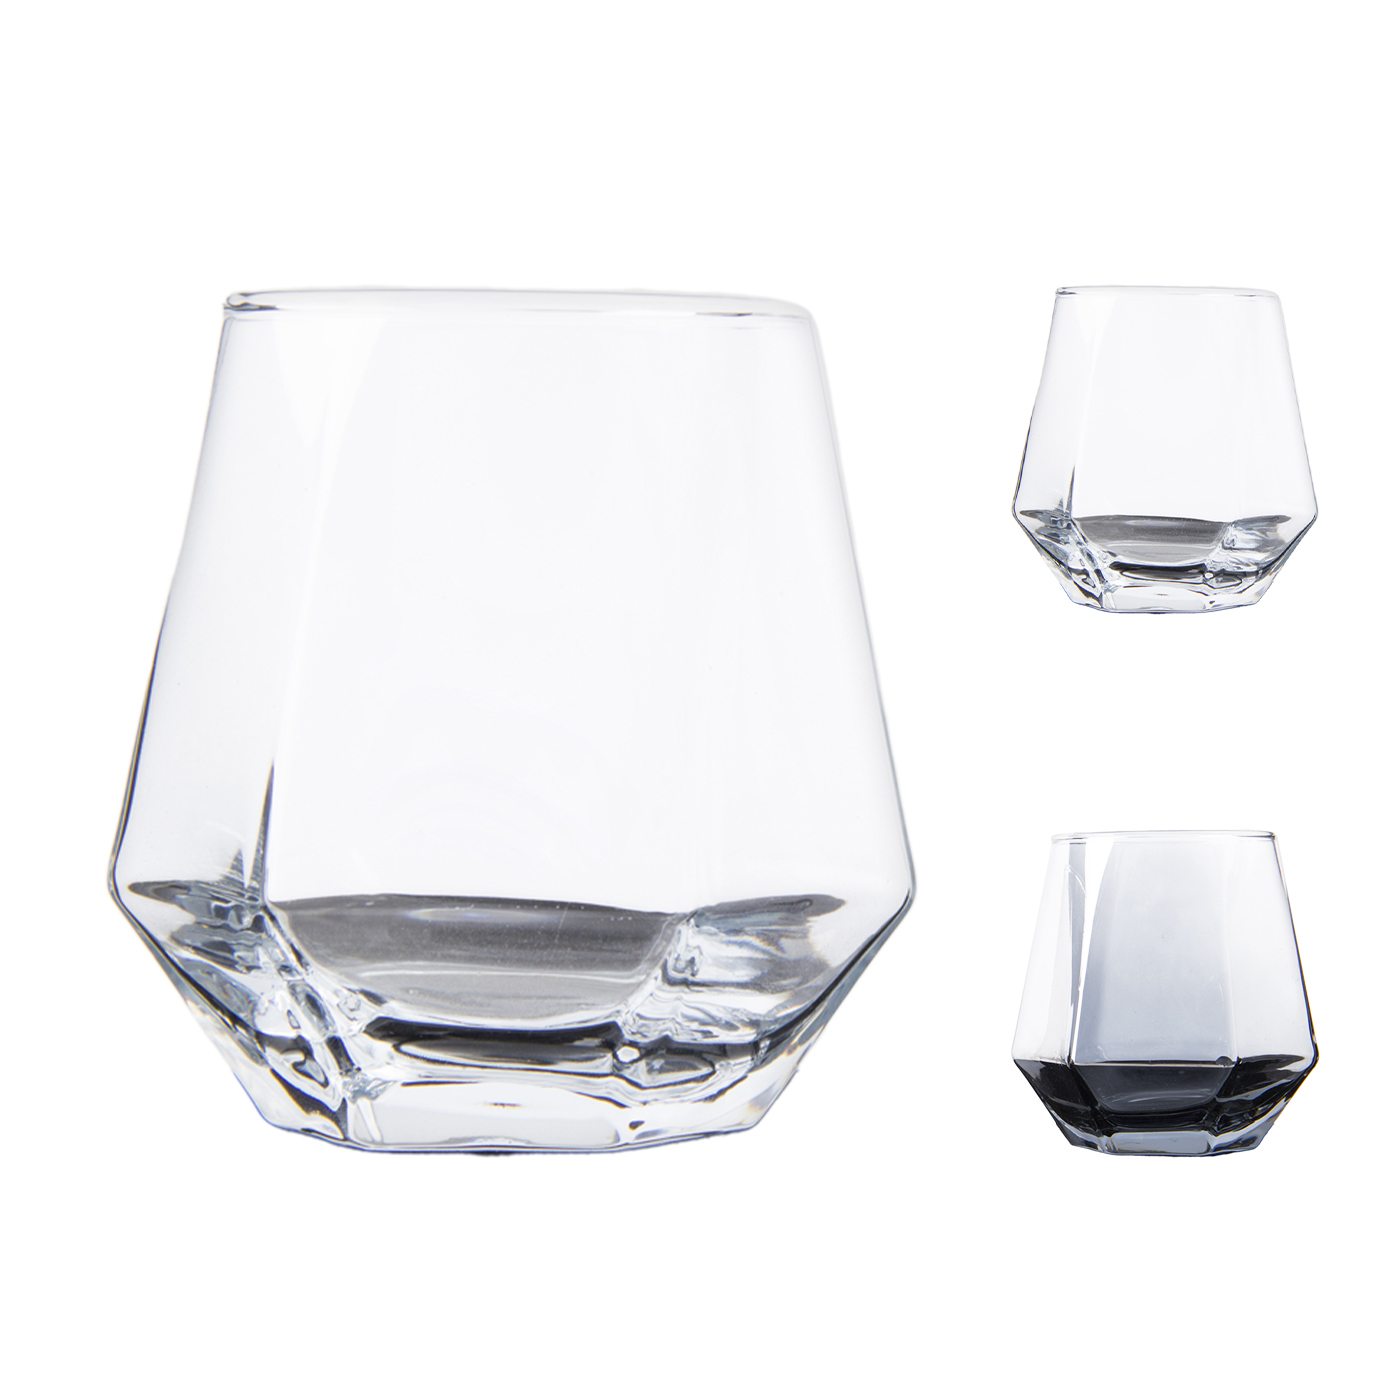 10 oz. Hexagonal Geometric Drinking Glass